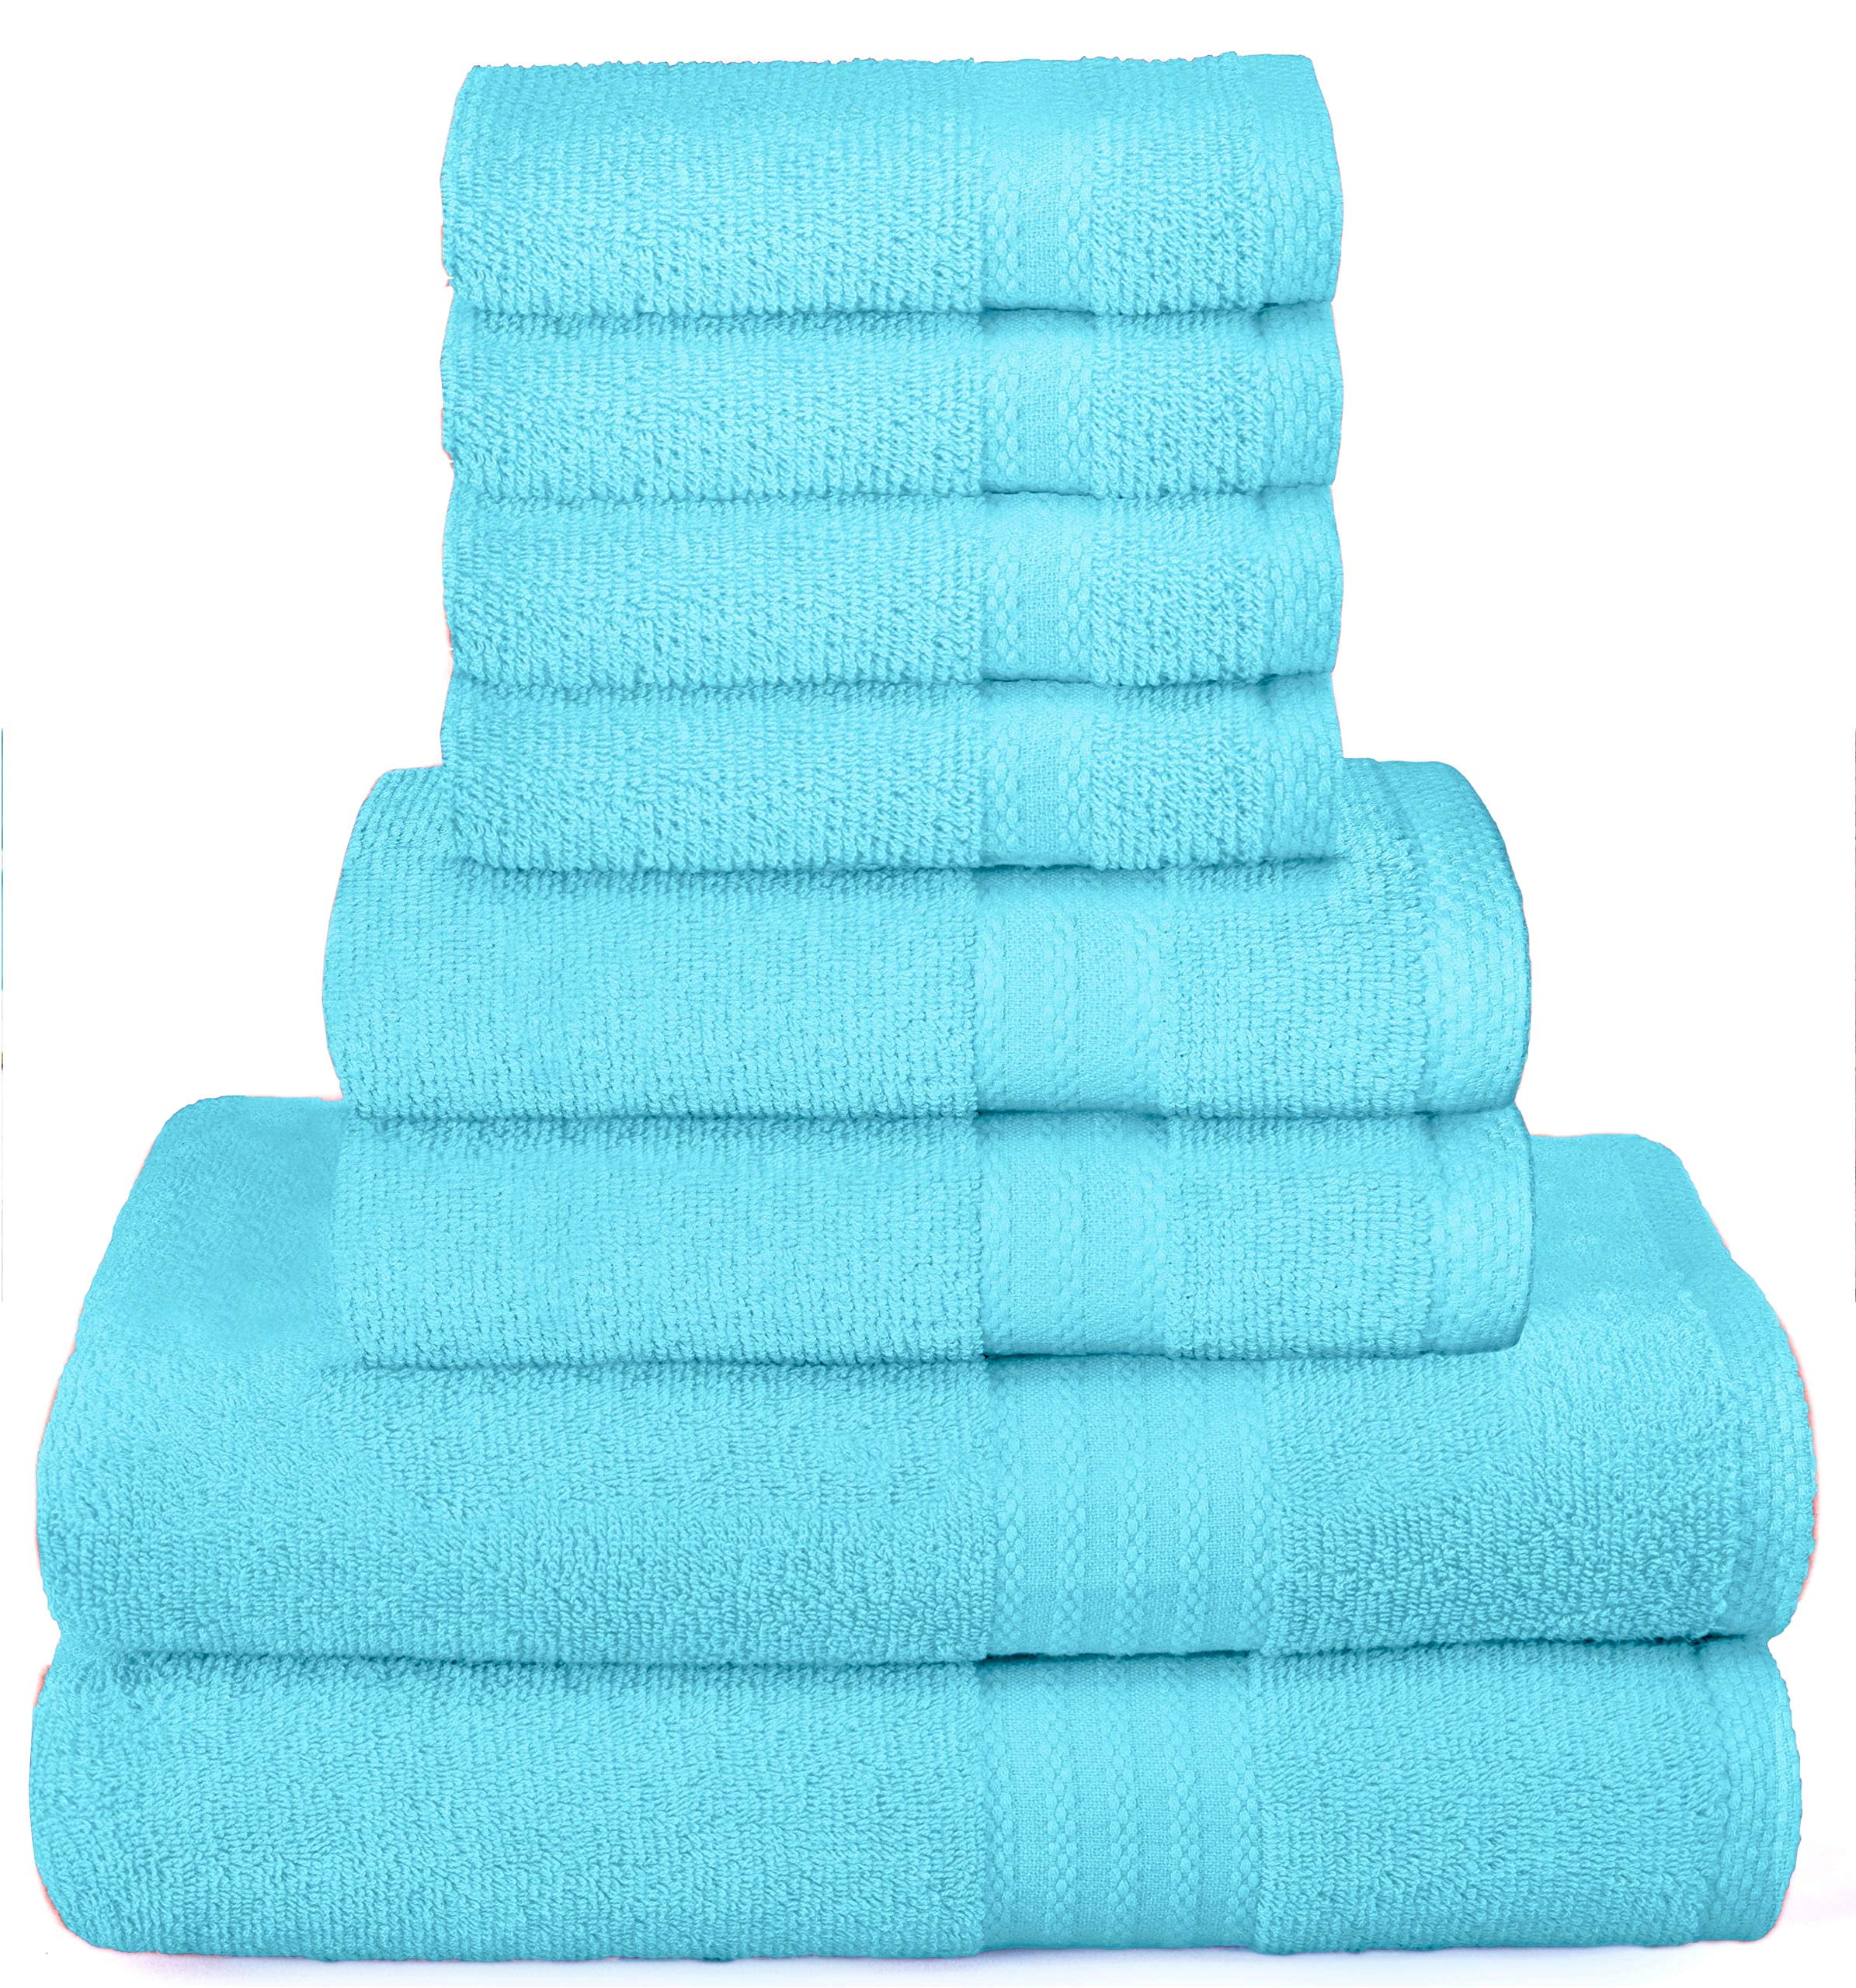 Magnolia Luxury Hotel Bath Towels 27X56 17 lb Super Plush Ring